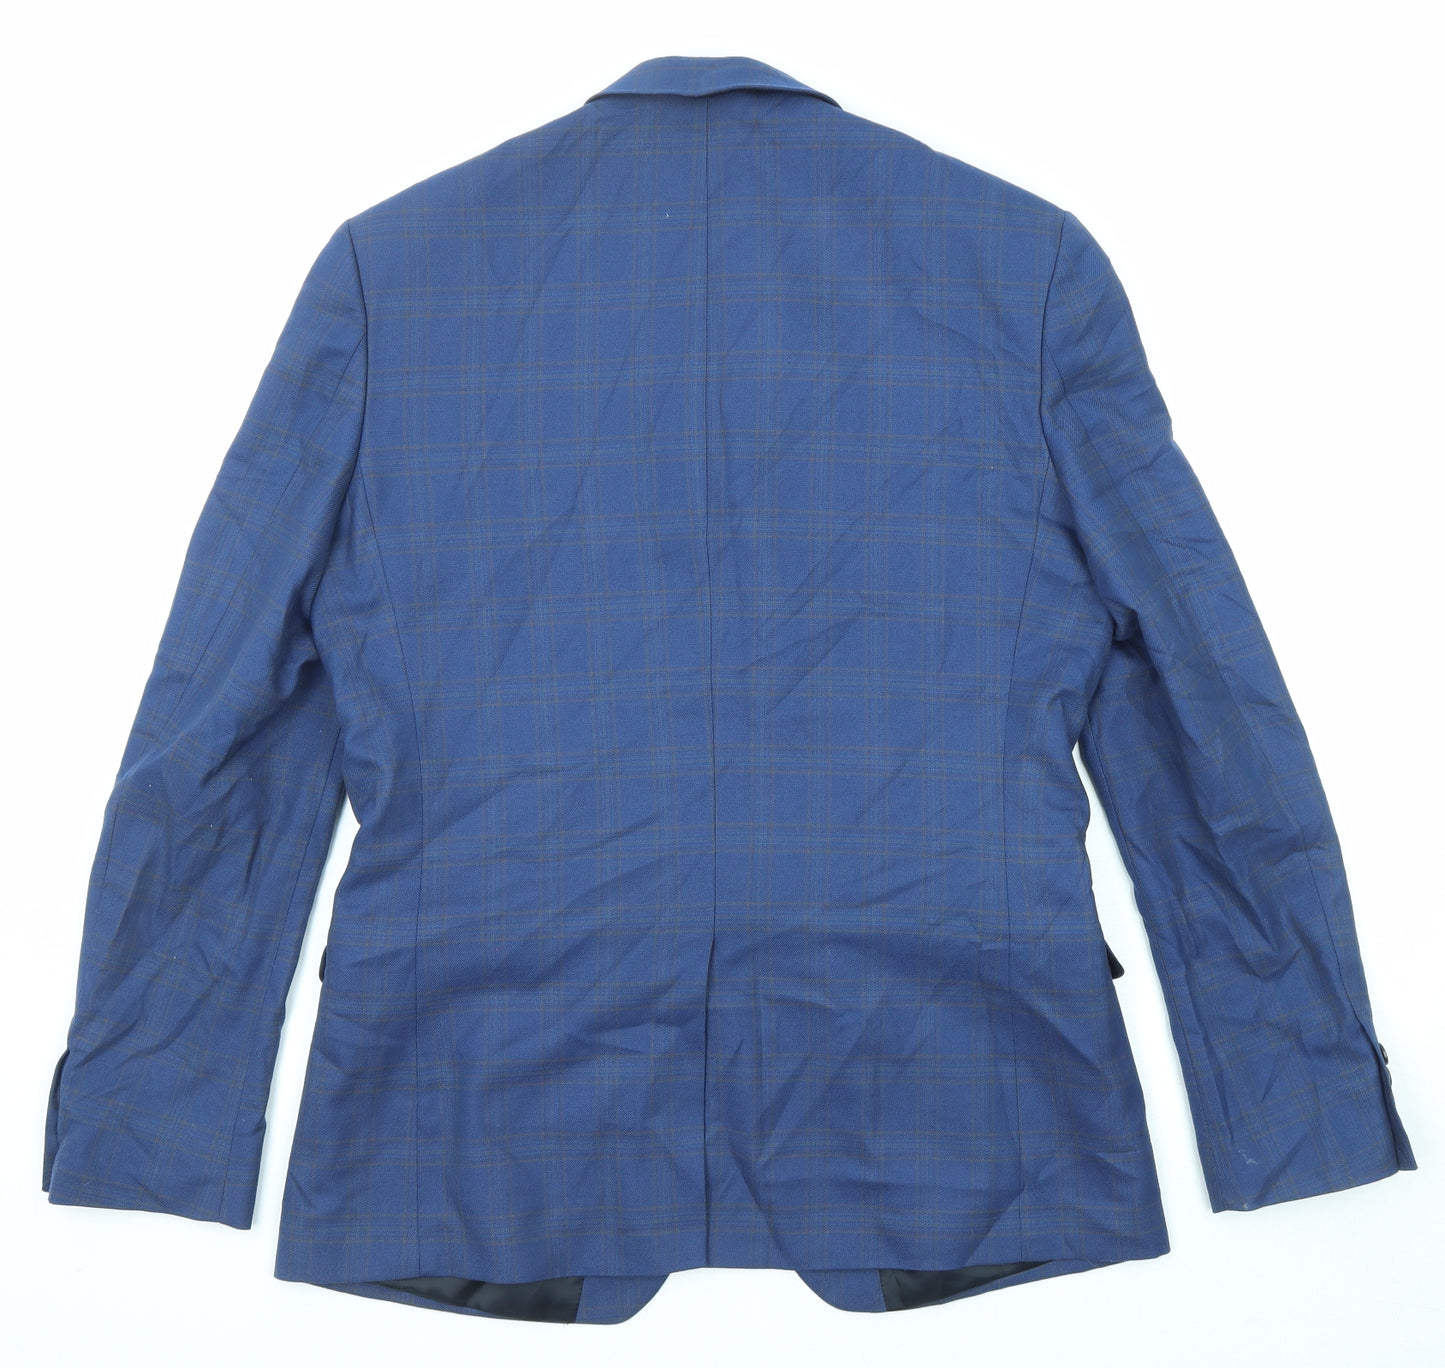 Limehaus Mens Blue Striped Polyester Jacket Suit Jacket Size 40 Regular